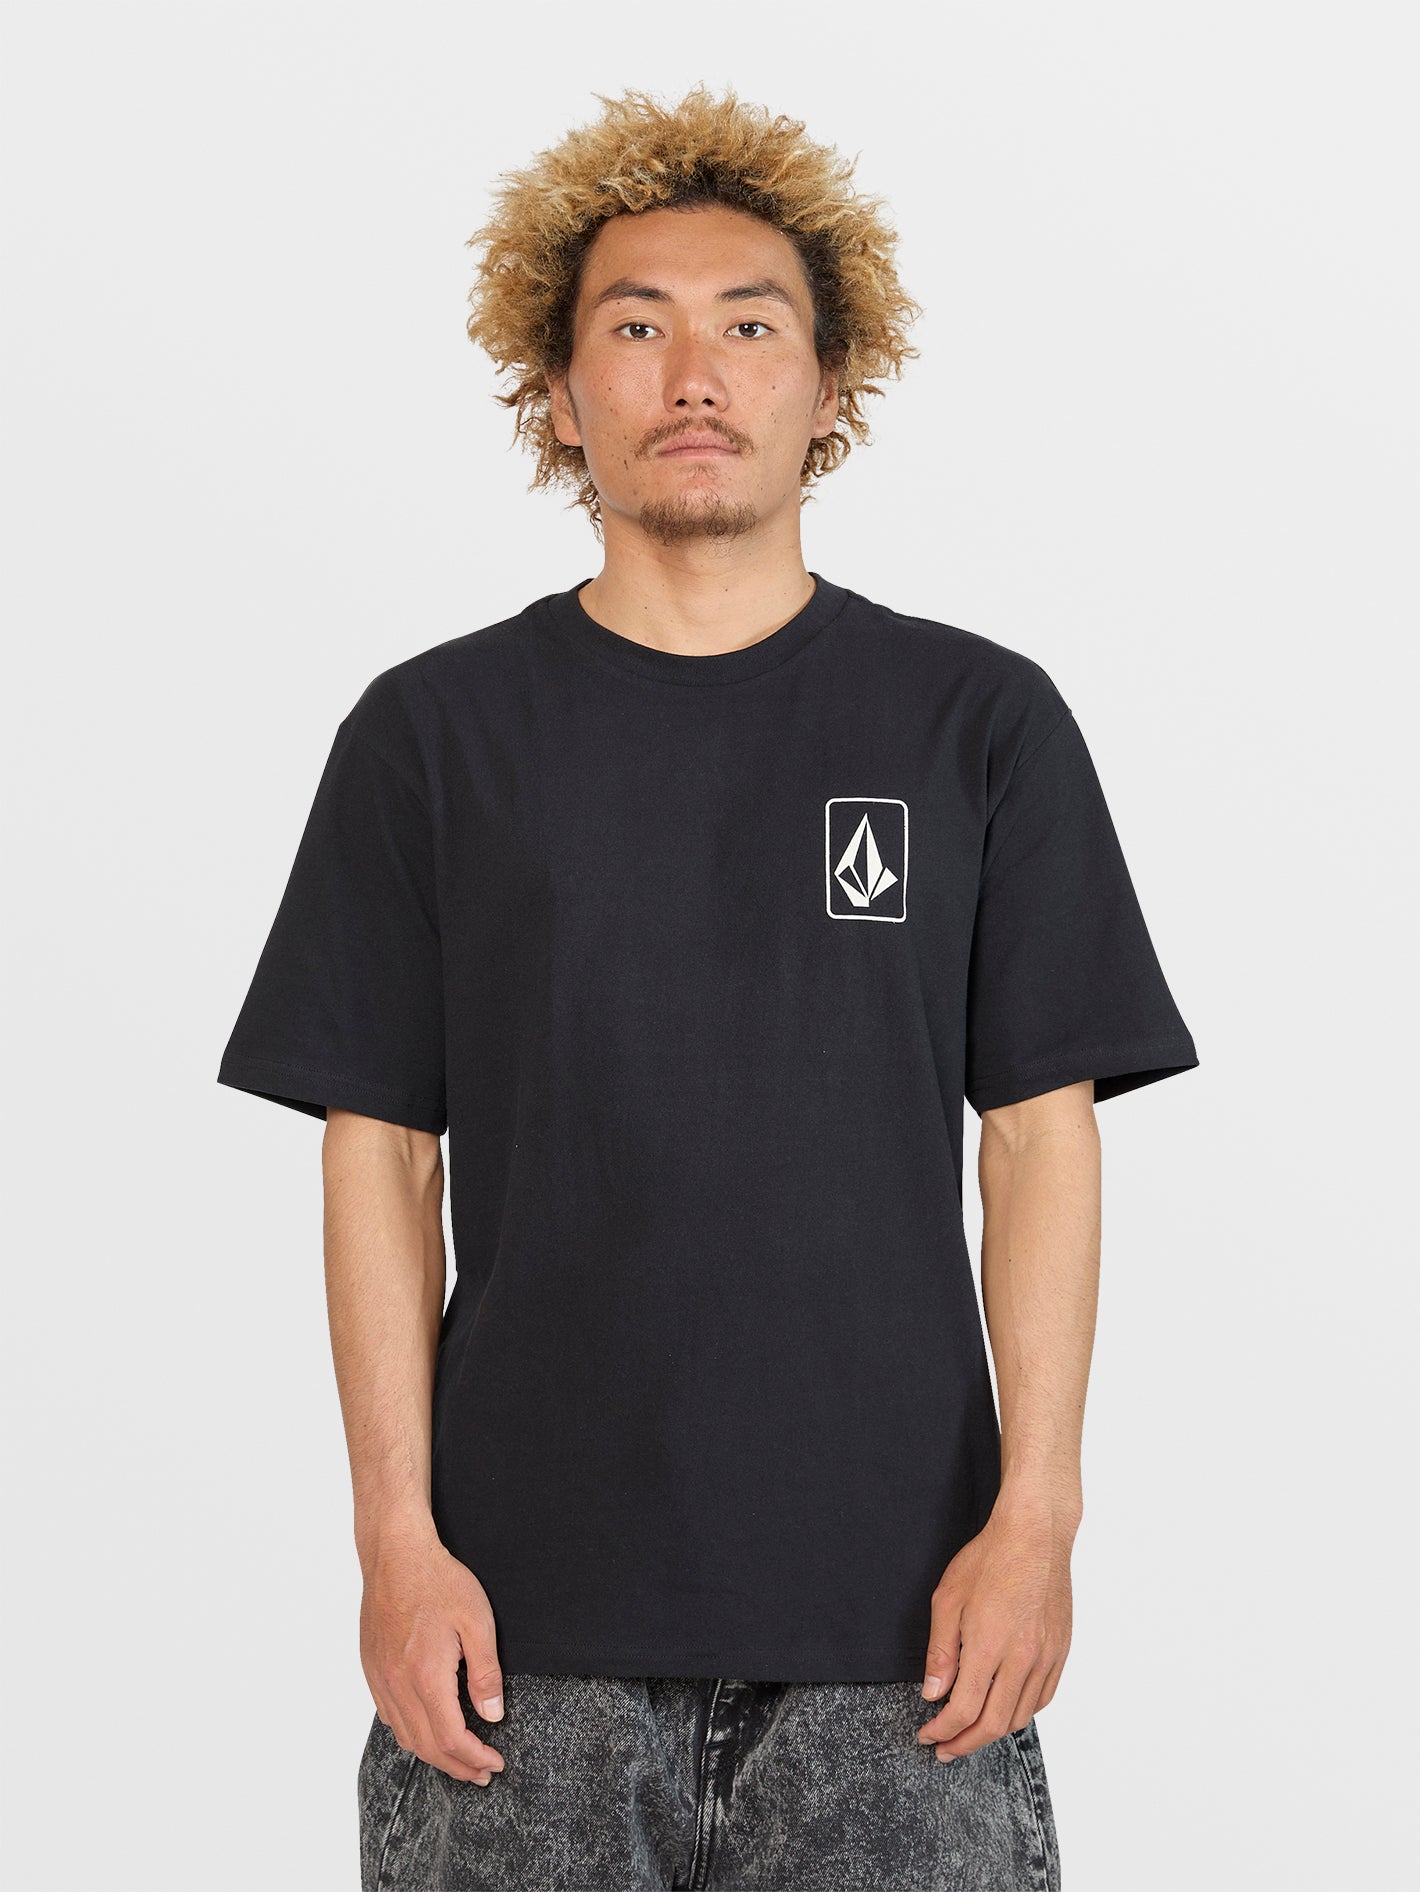 Skate Vitals Originator Short Sleeve Tee Shirt - Black